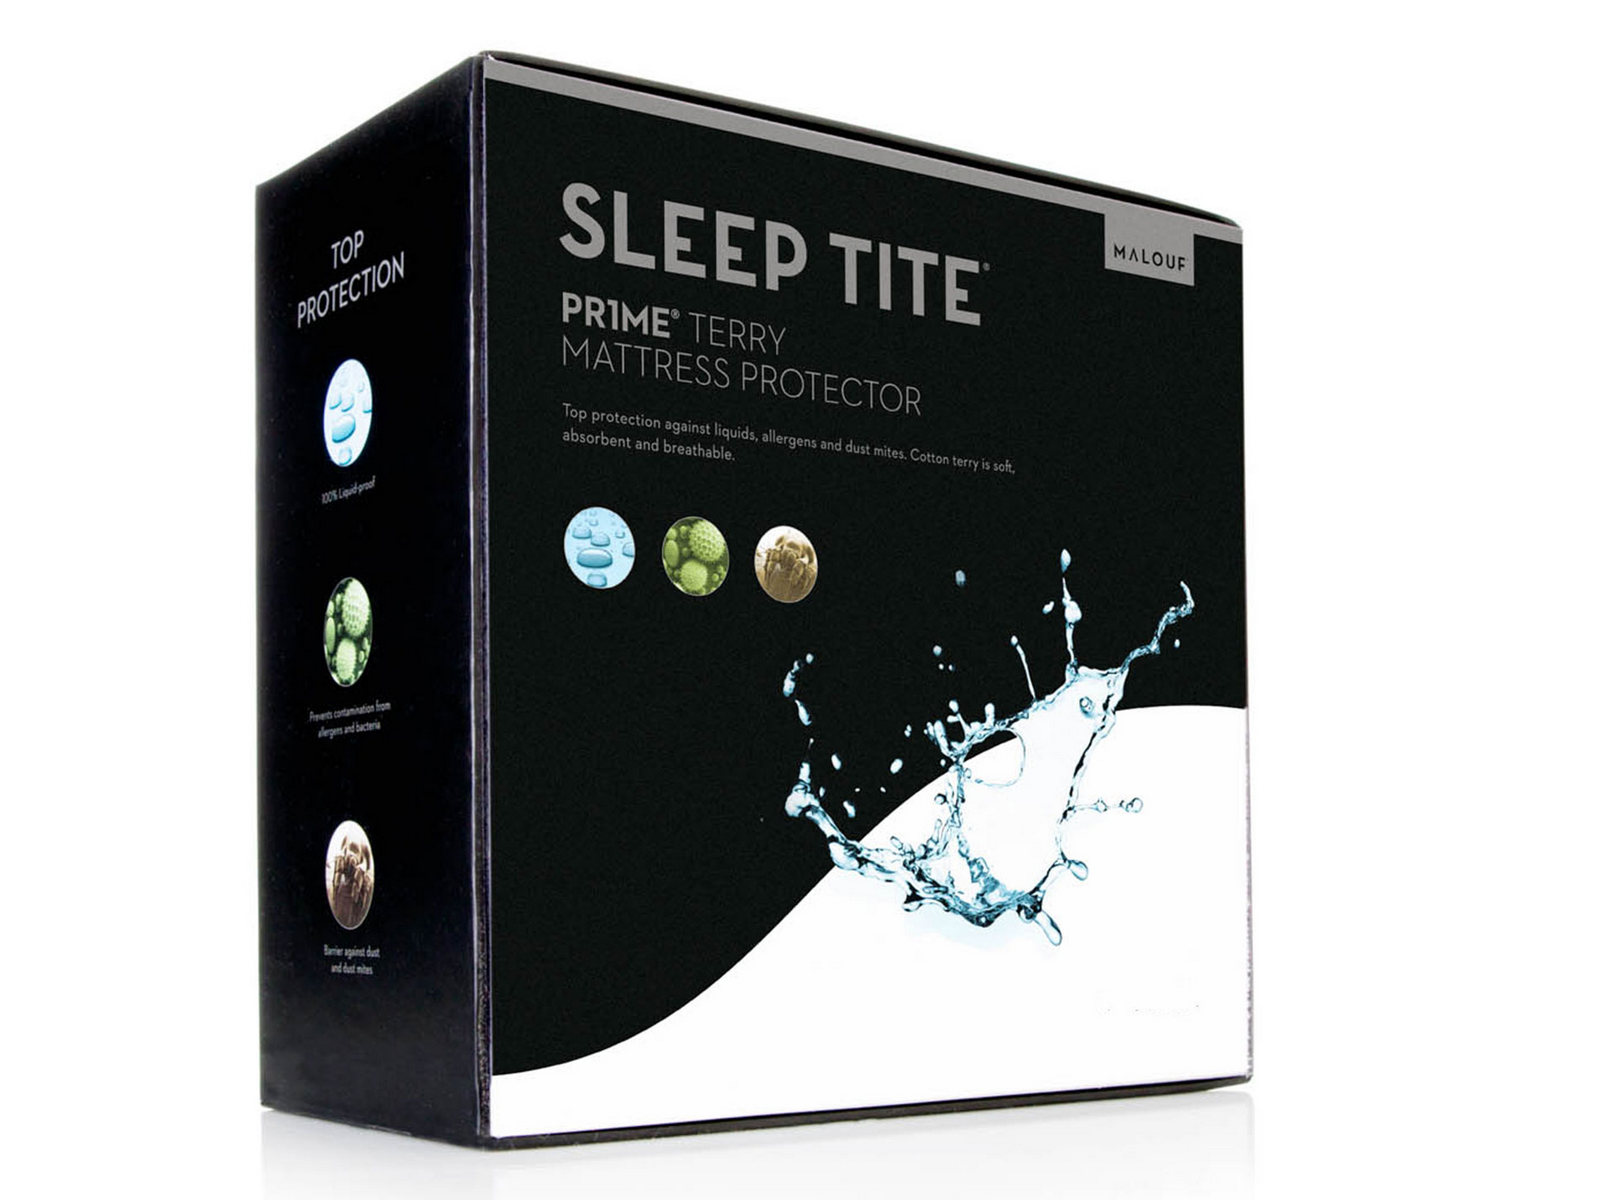 Malouf Full Extra Long Sleep Tite Pr1me Terry Mattress Protector